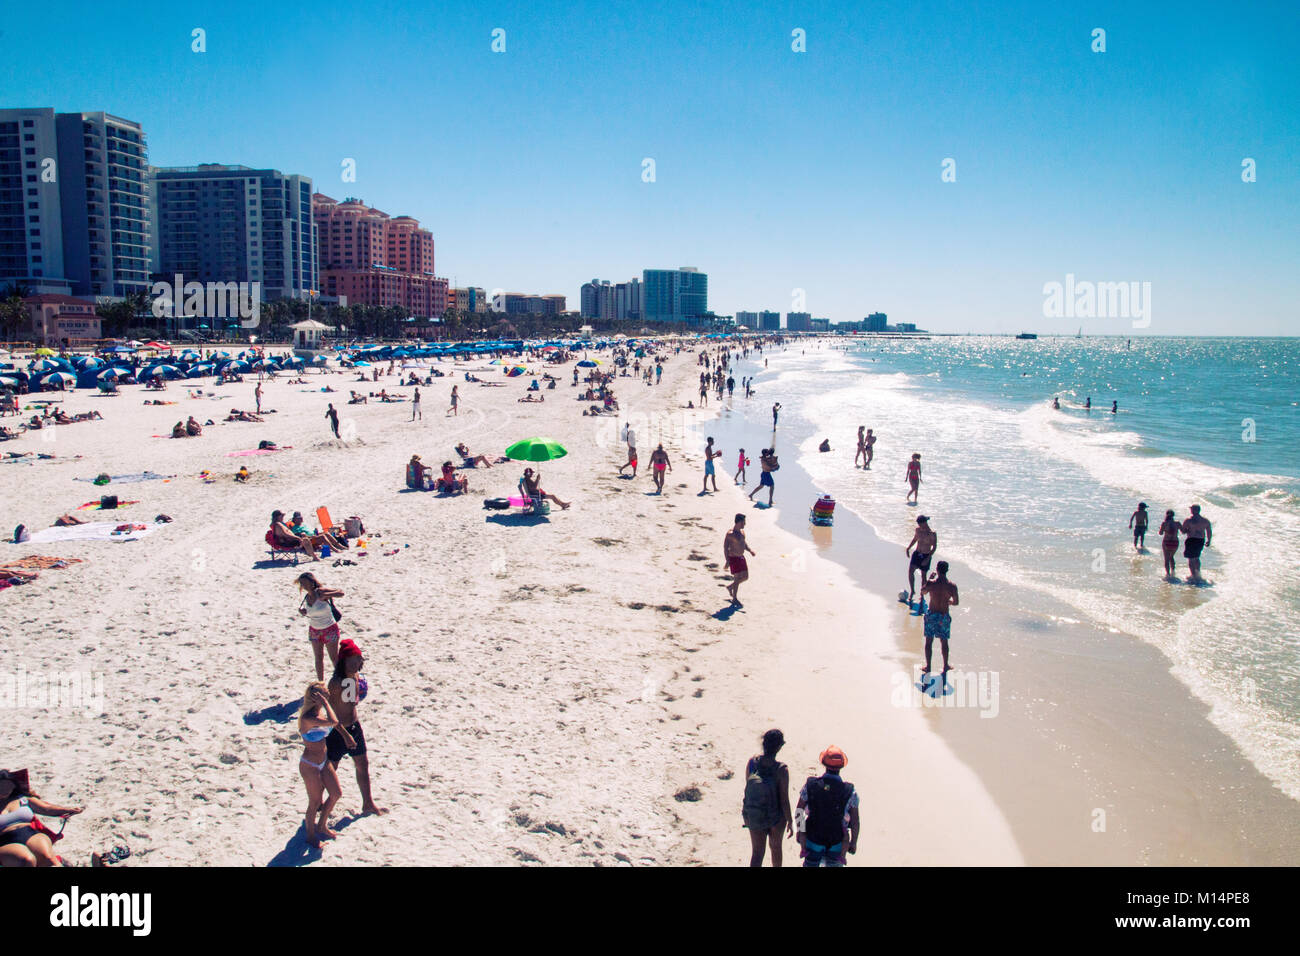 Crowded beach, exotic sandy beach, people enjoying the sun, Florida beach view, Clearwater beach Stock Photo